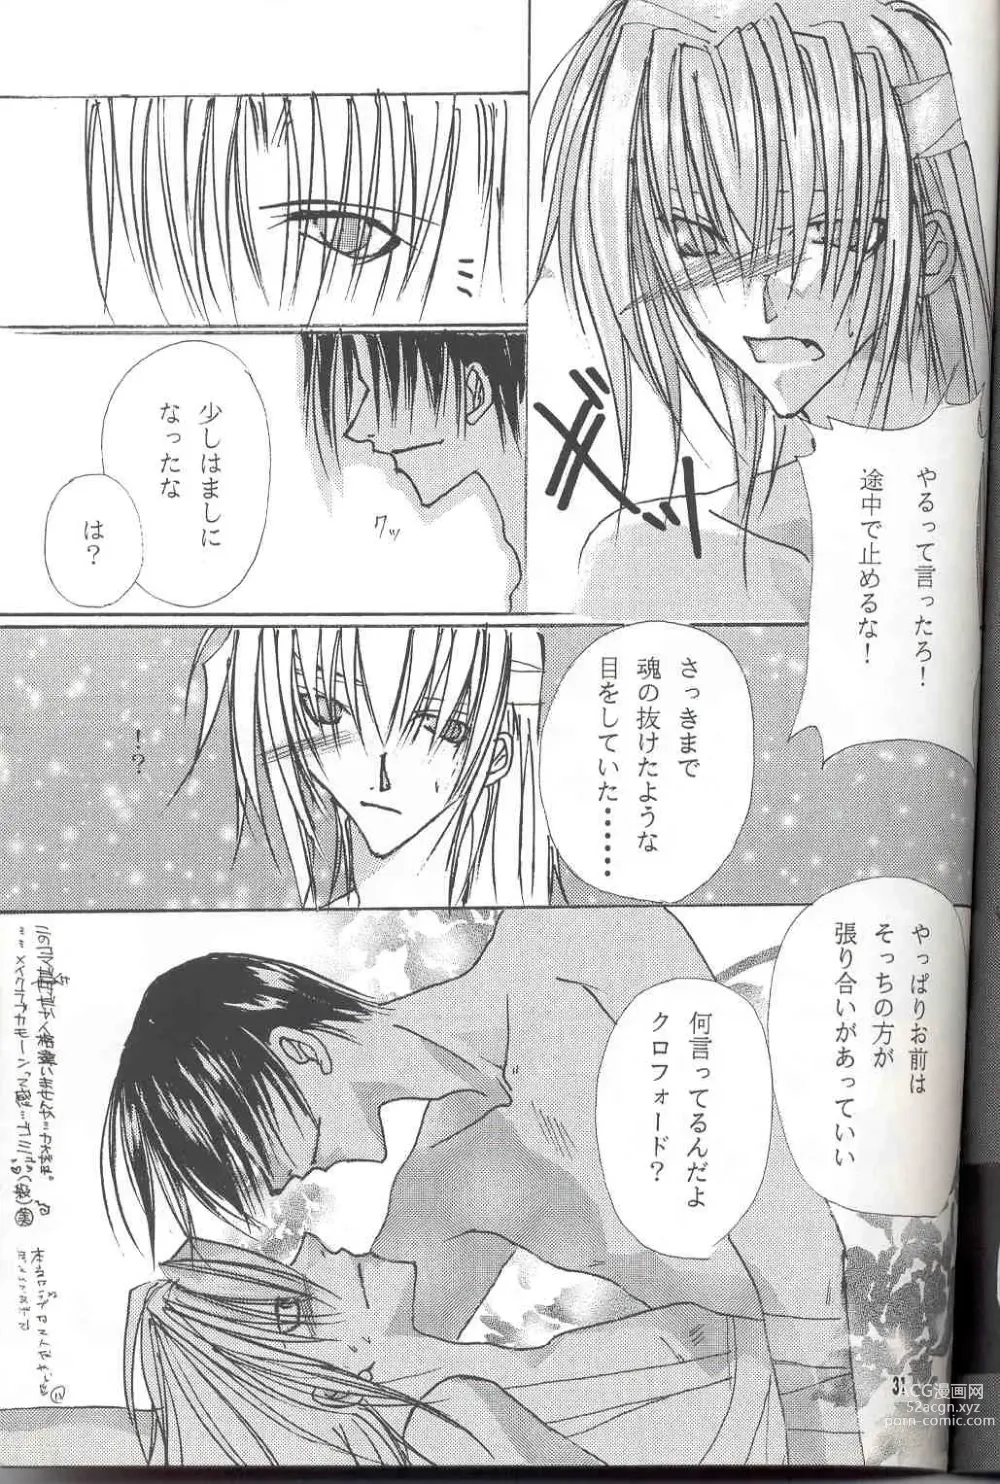 Page 30 of doujinshi Sentimental